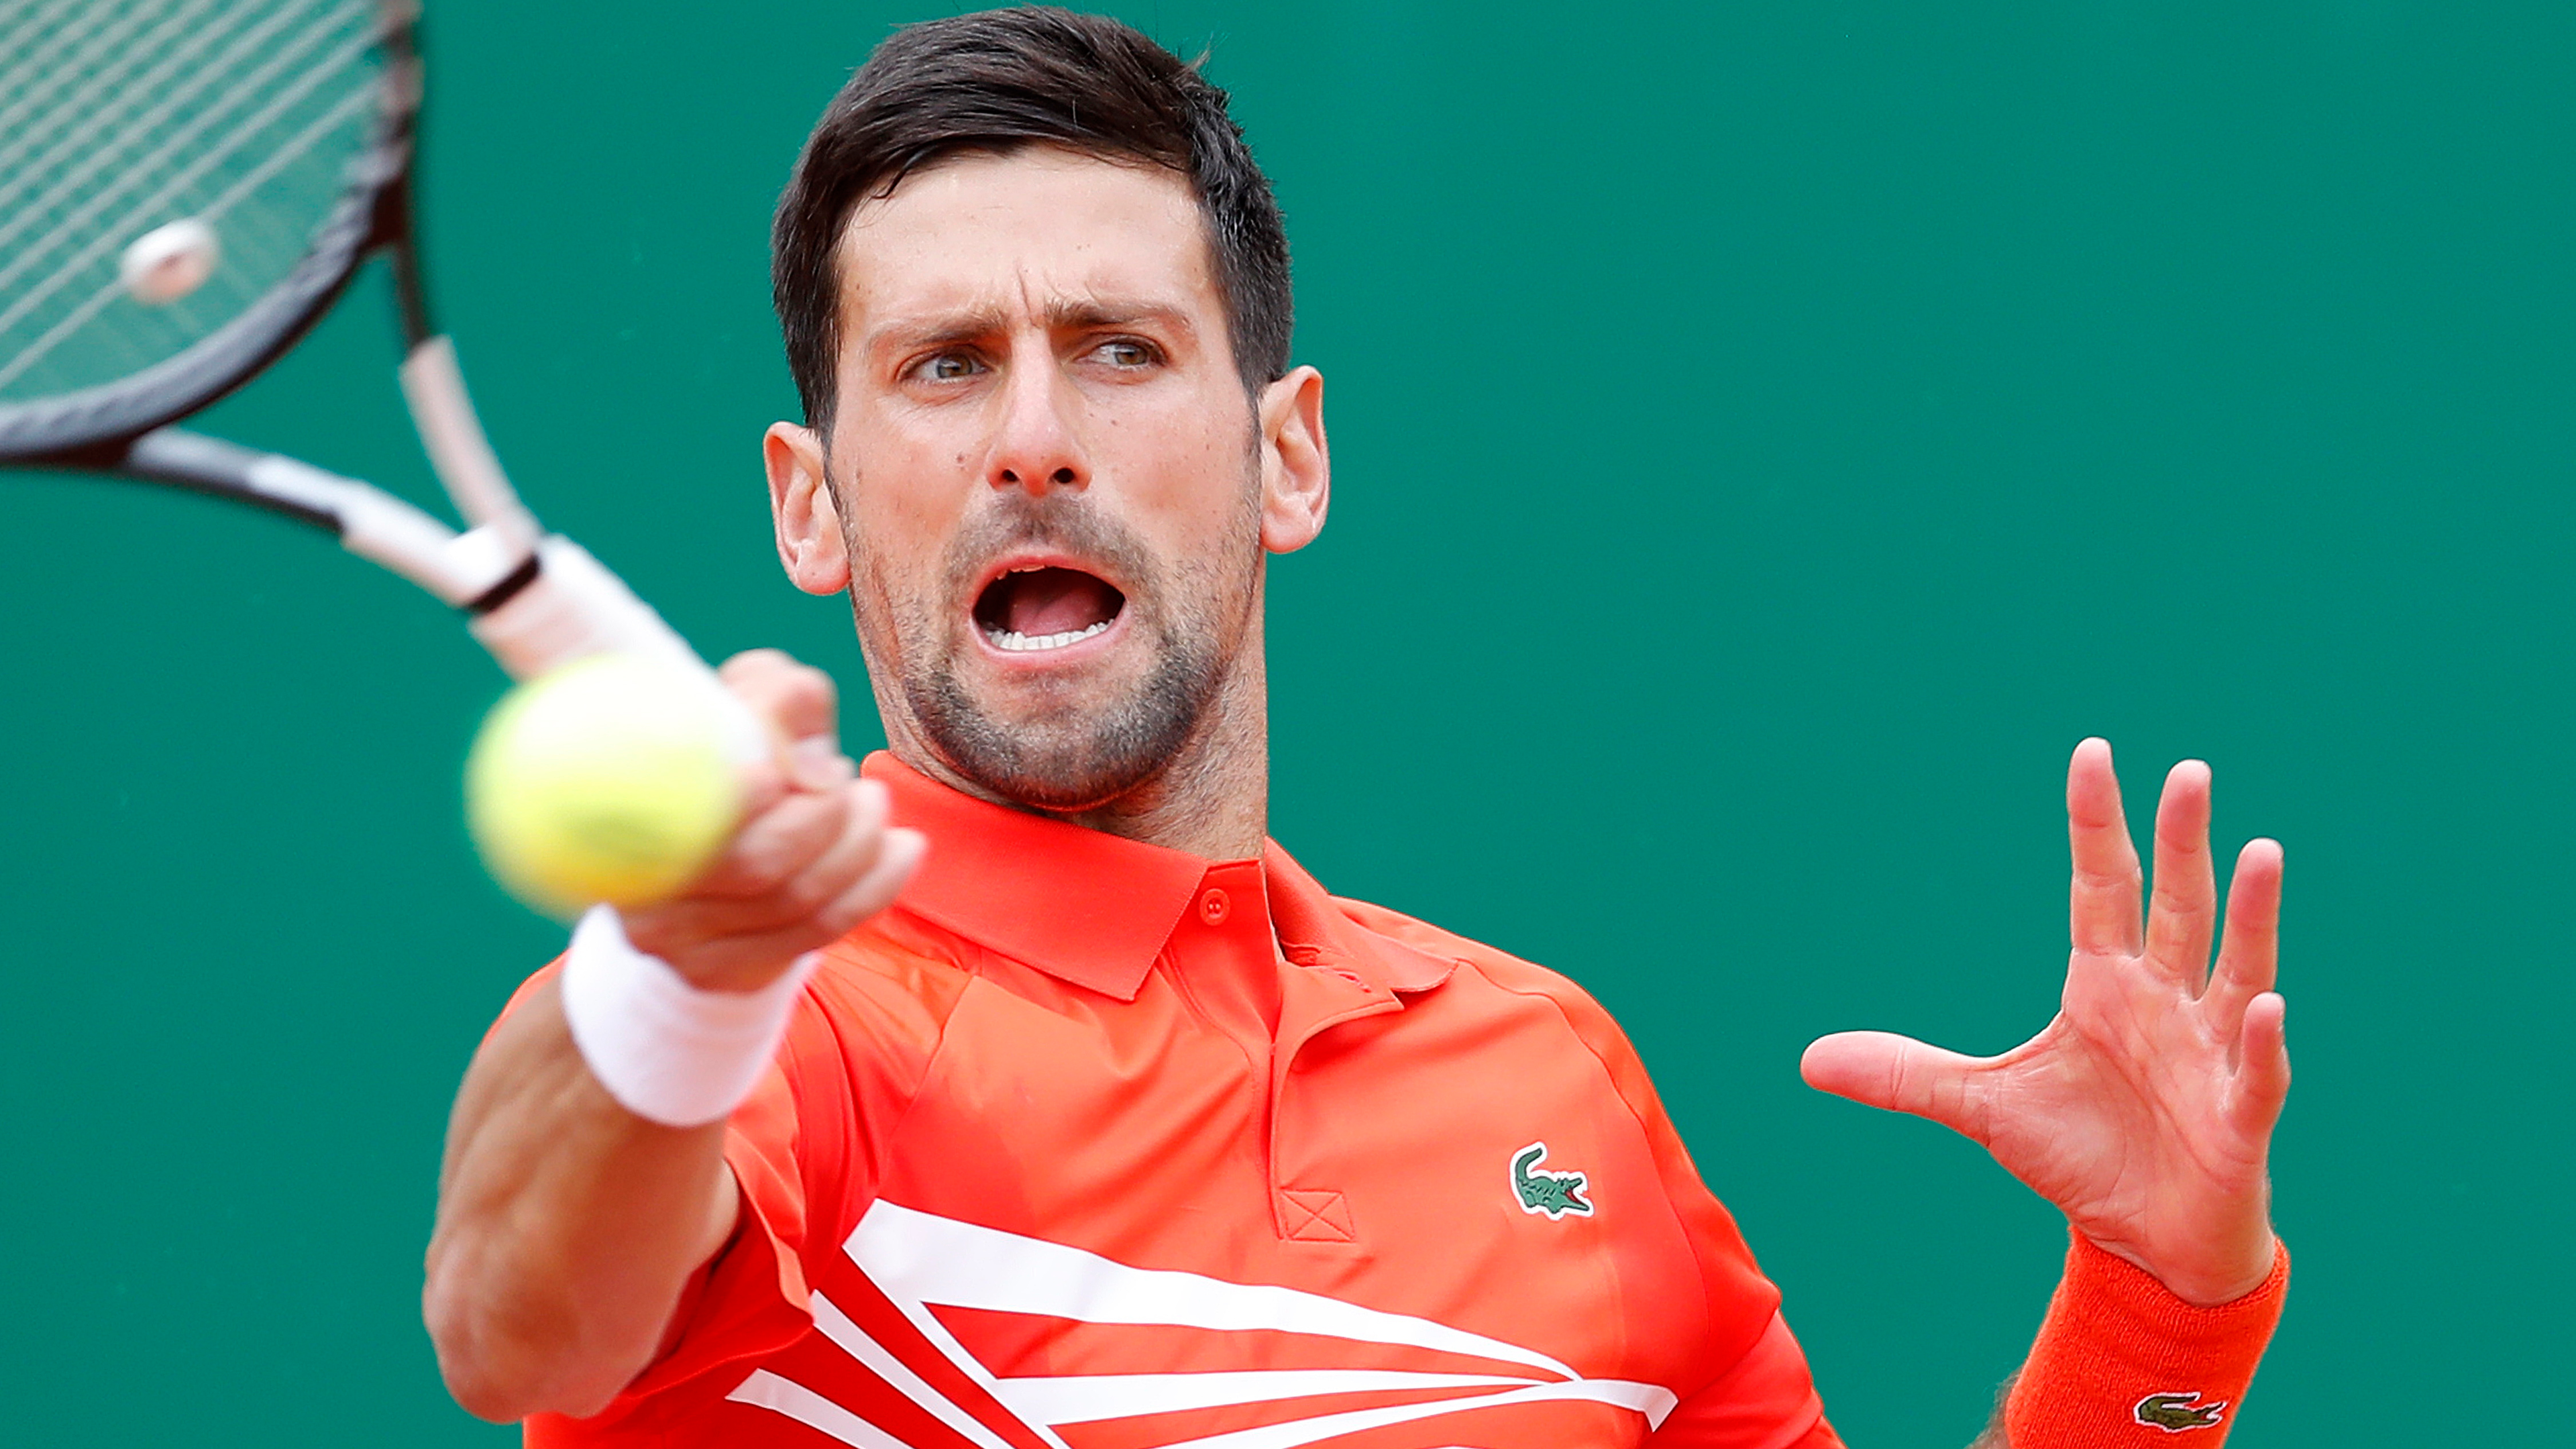 Novak Djokovic has epic tantrum in Monte Carlo win over Philipp Kohlschreiber